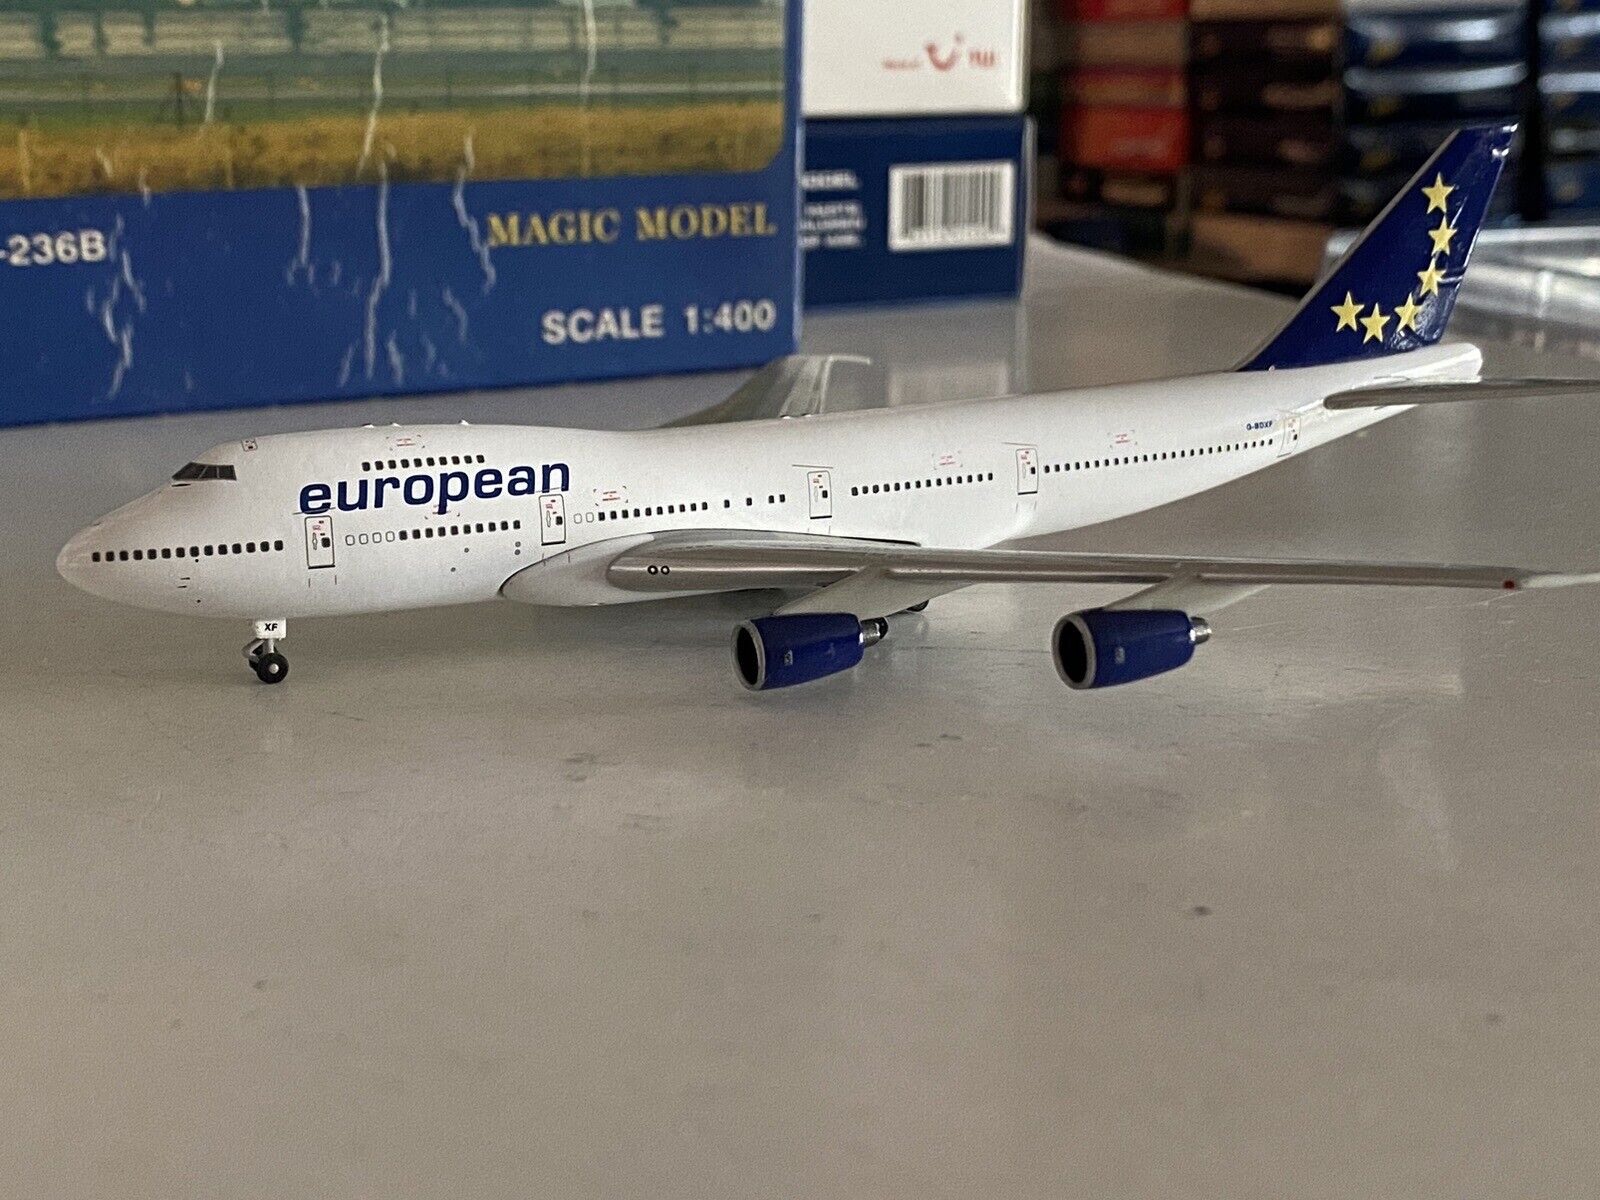 Magic Models European Aircharter Boeing 747-200 1:400 G-BDXF like Gemini Jets